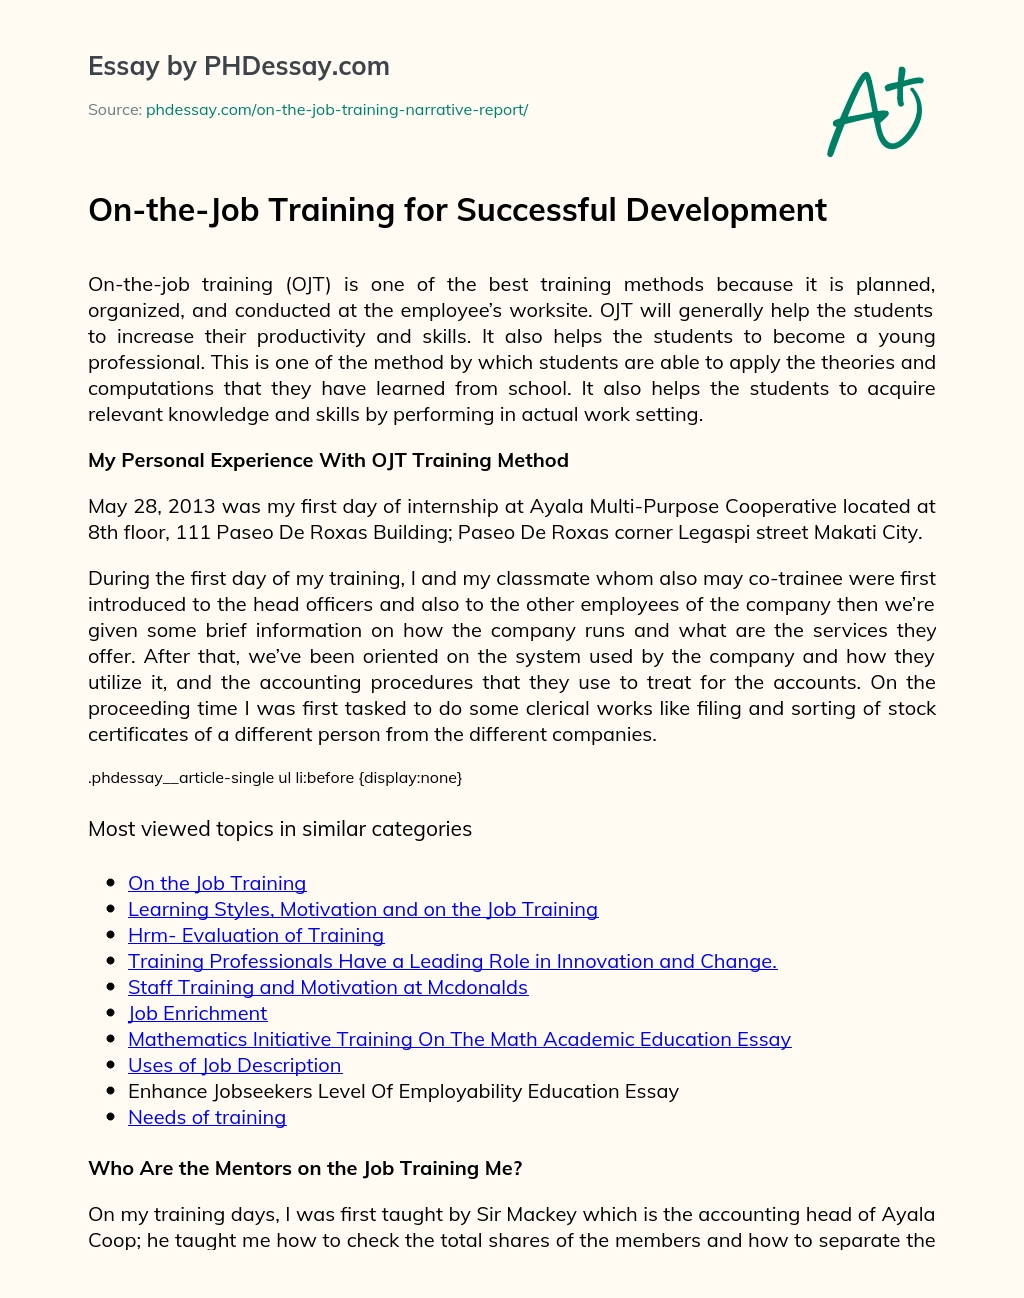 On-the-Job Training for Successful Development essay